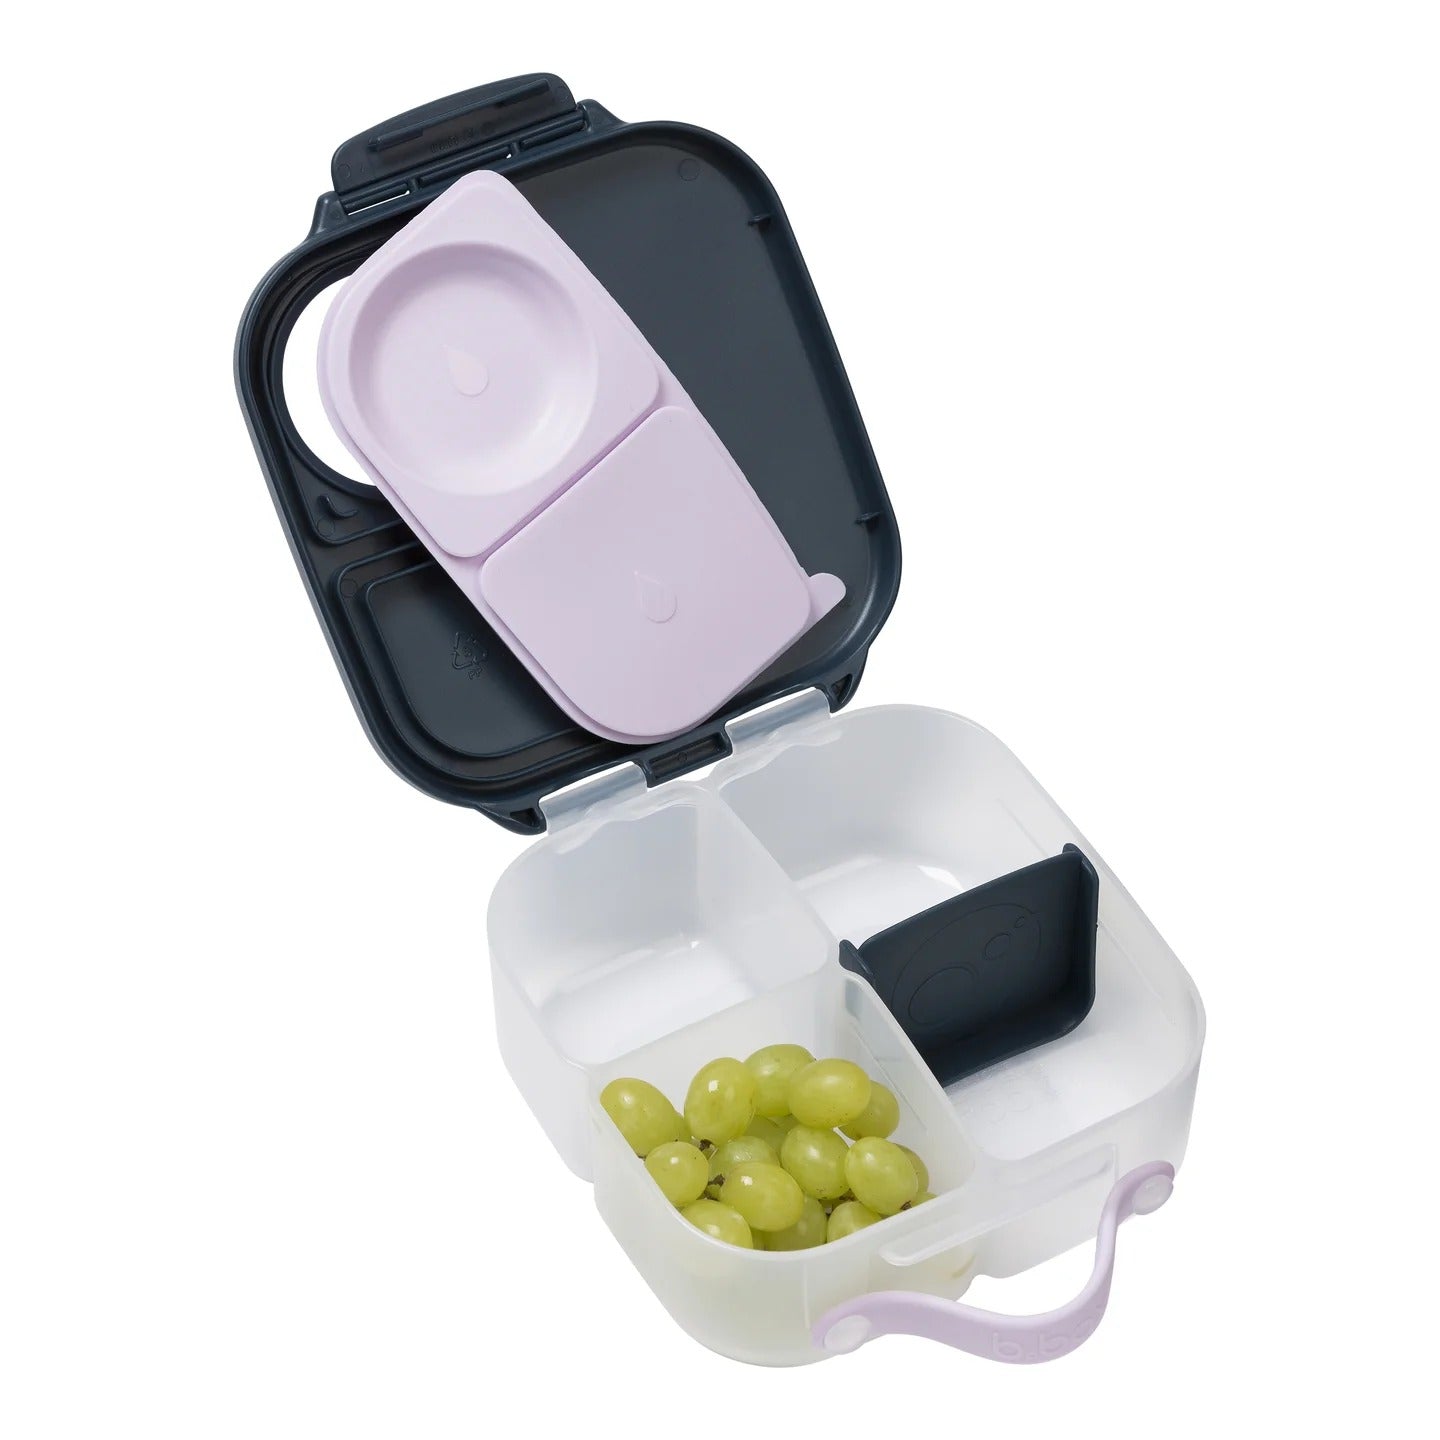 B.box Mini Lunchbox in Indigo Rose available at Bear & Moo